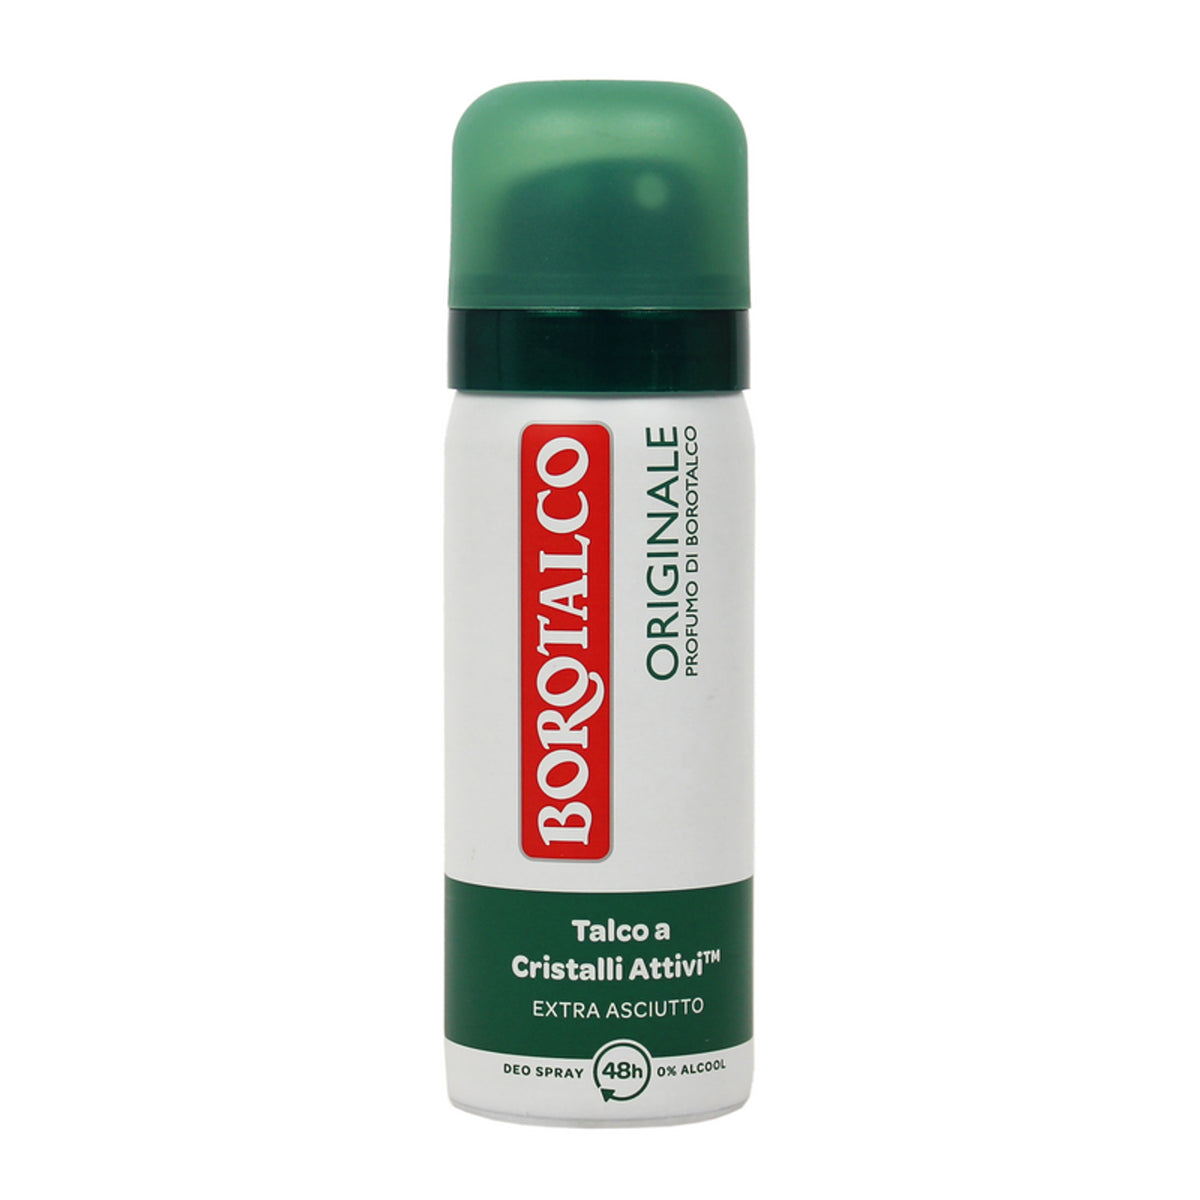 Original Borotalco deodorant spray scent of Borotalco 50 ml